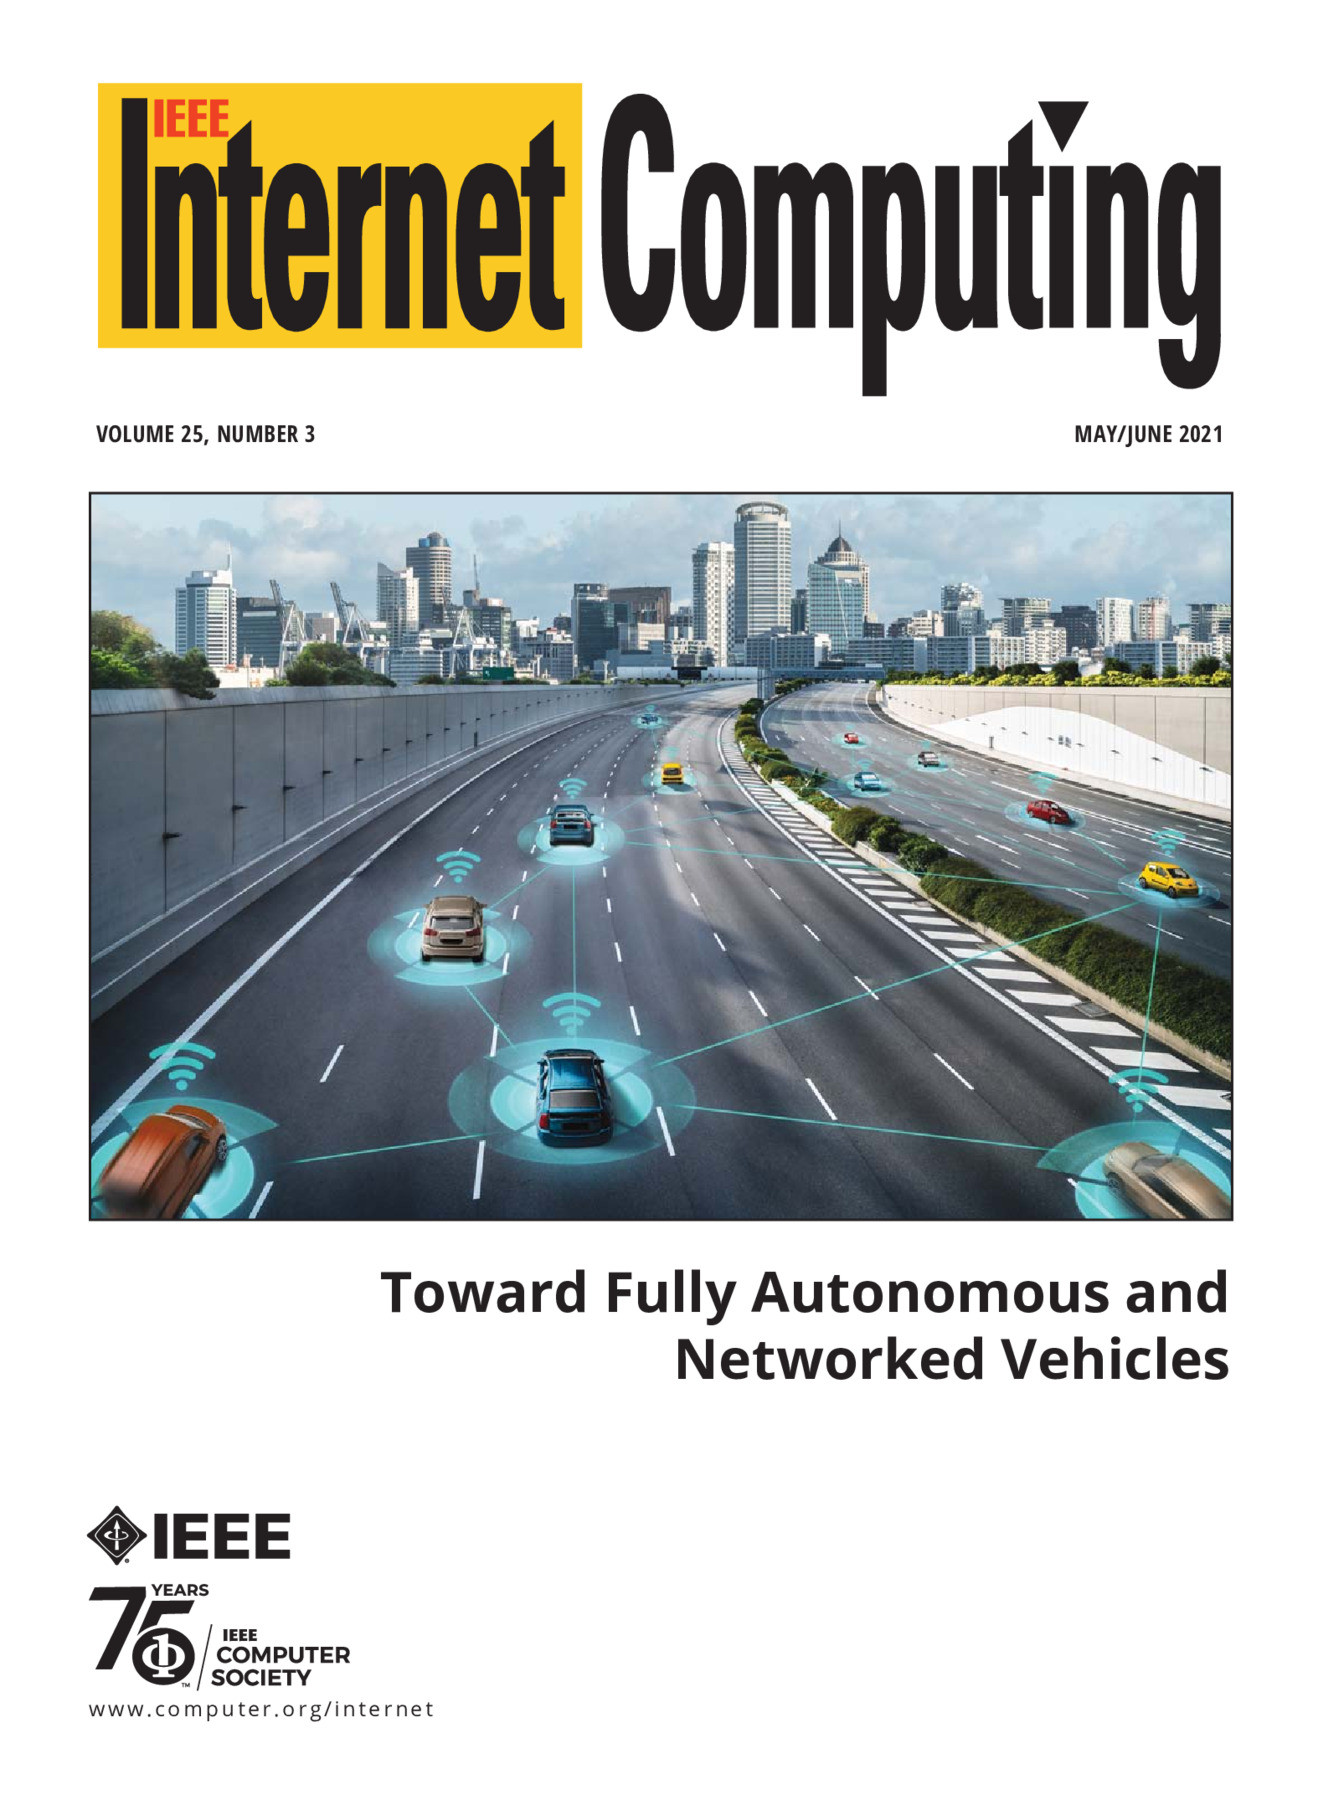 IEEE Internet Computing May/June 2021 Vol. 25 No. 3